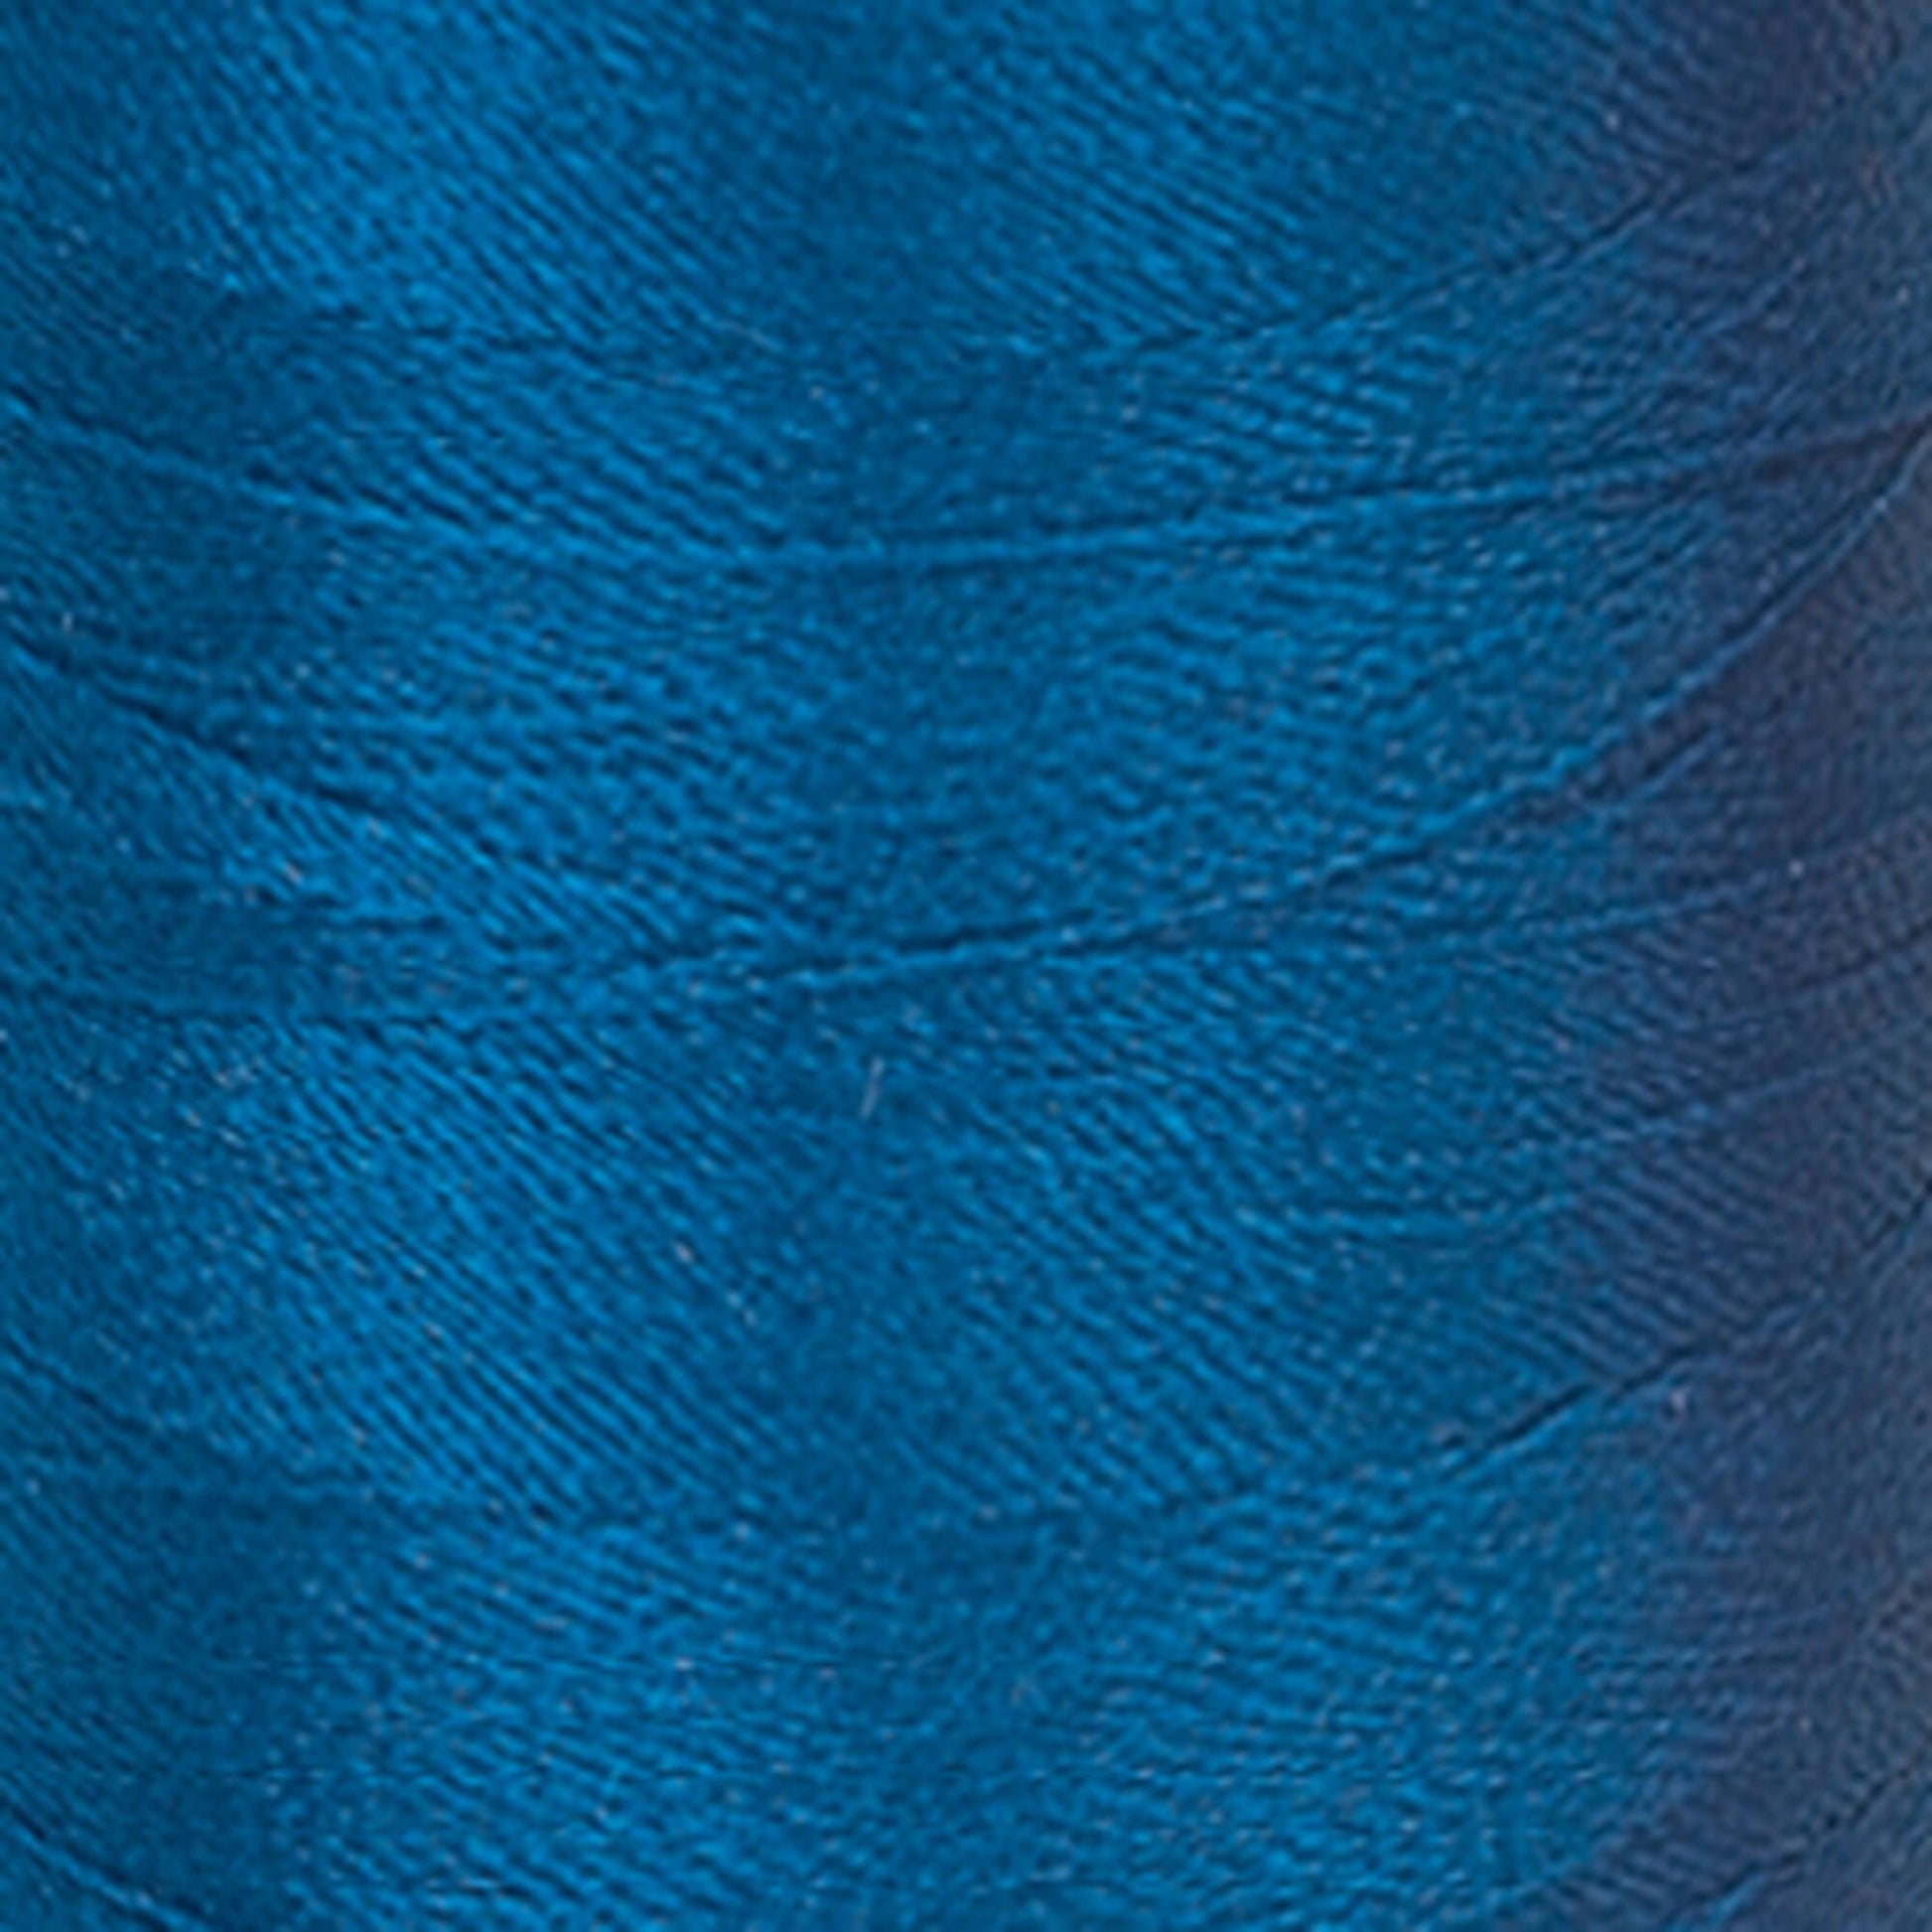 Coats & Clark Machine Embroidery Thread (1100 Yards)